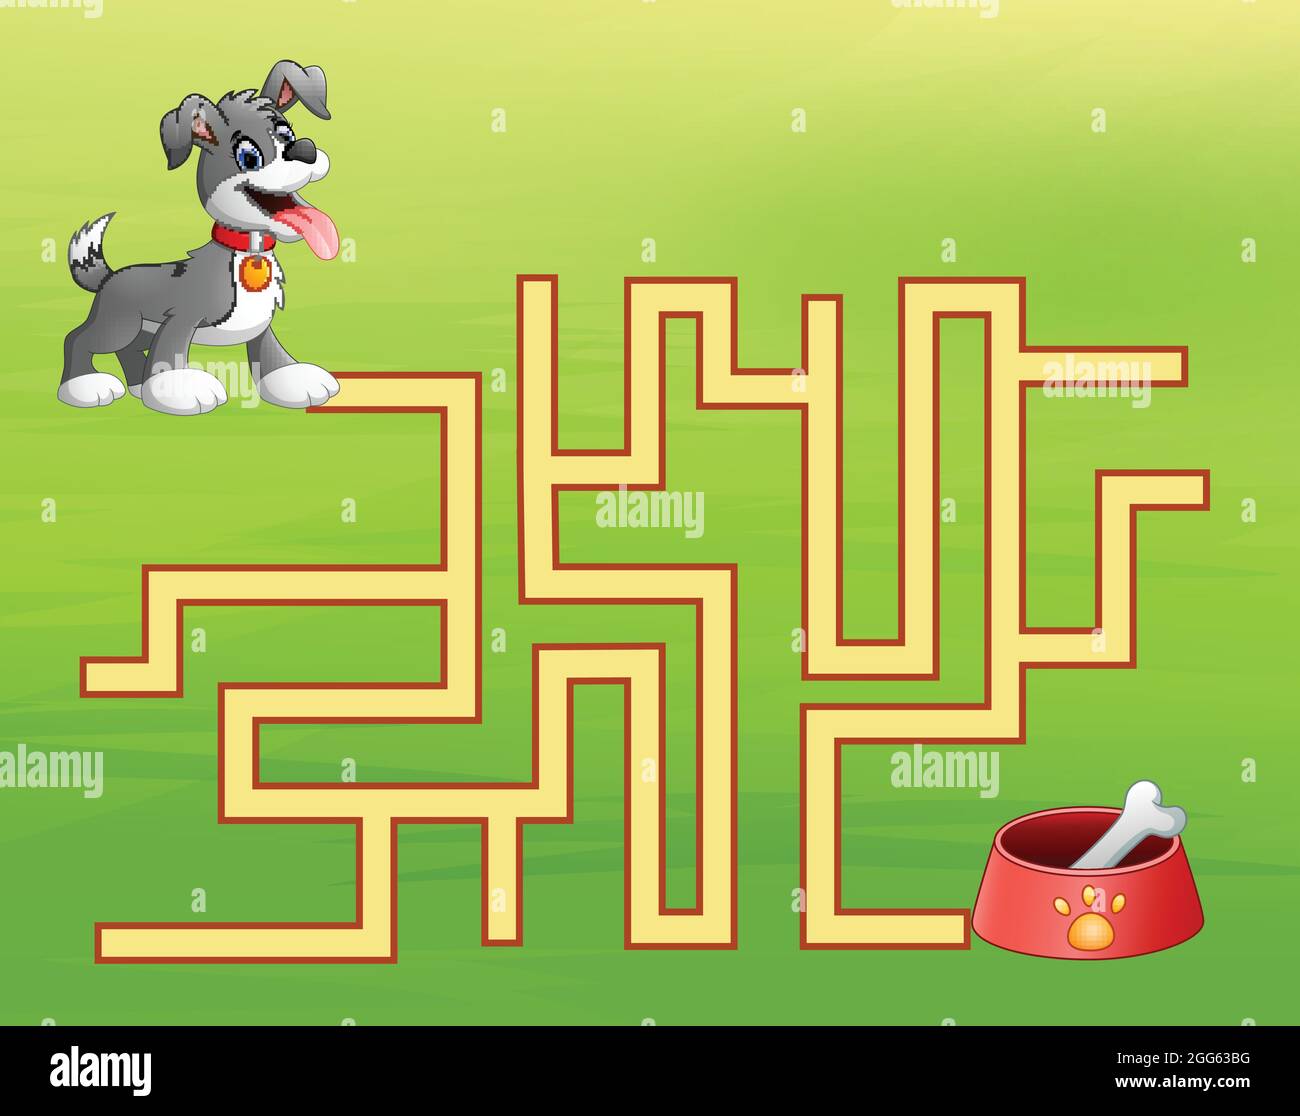 https://c8.alamy.com/comp/2GG63BG/game-dog-maze-find-way-to-the-dog-food-container-2GG63BG.jpg